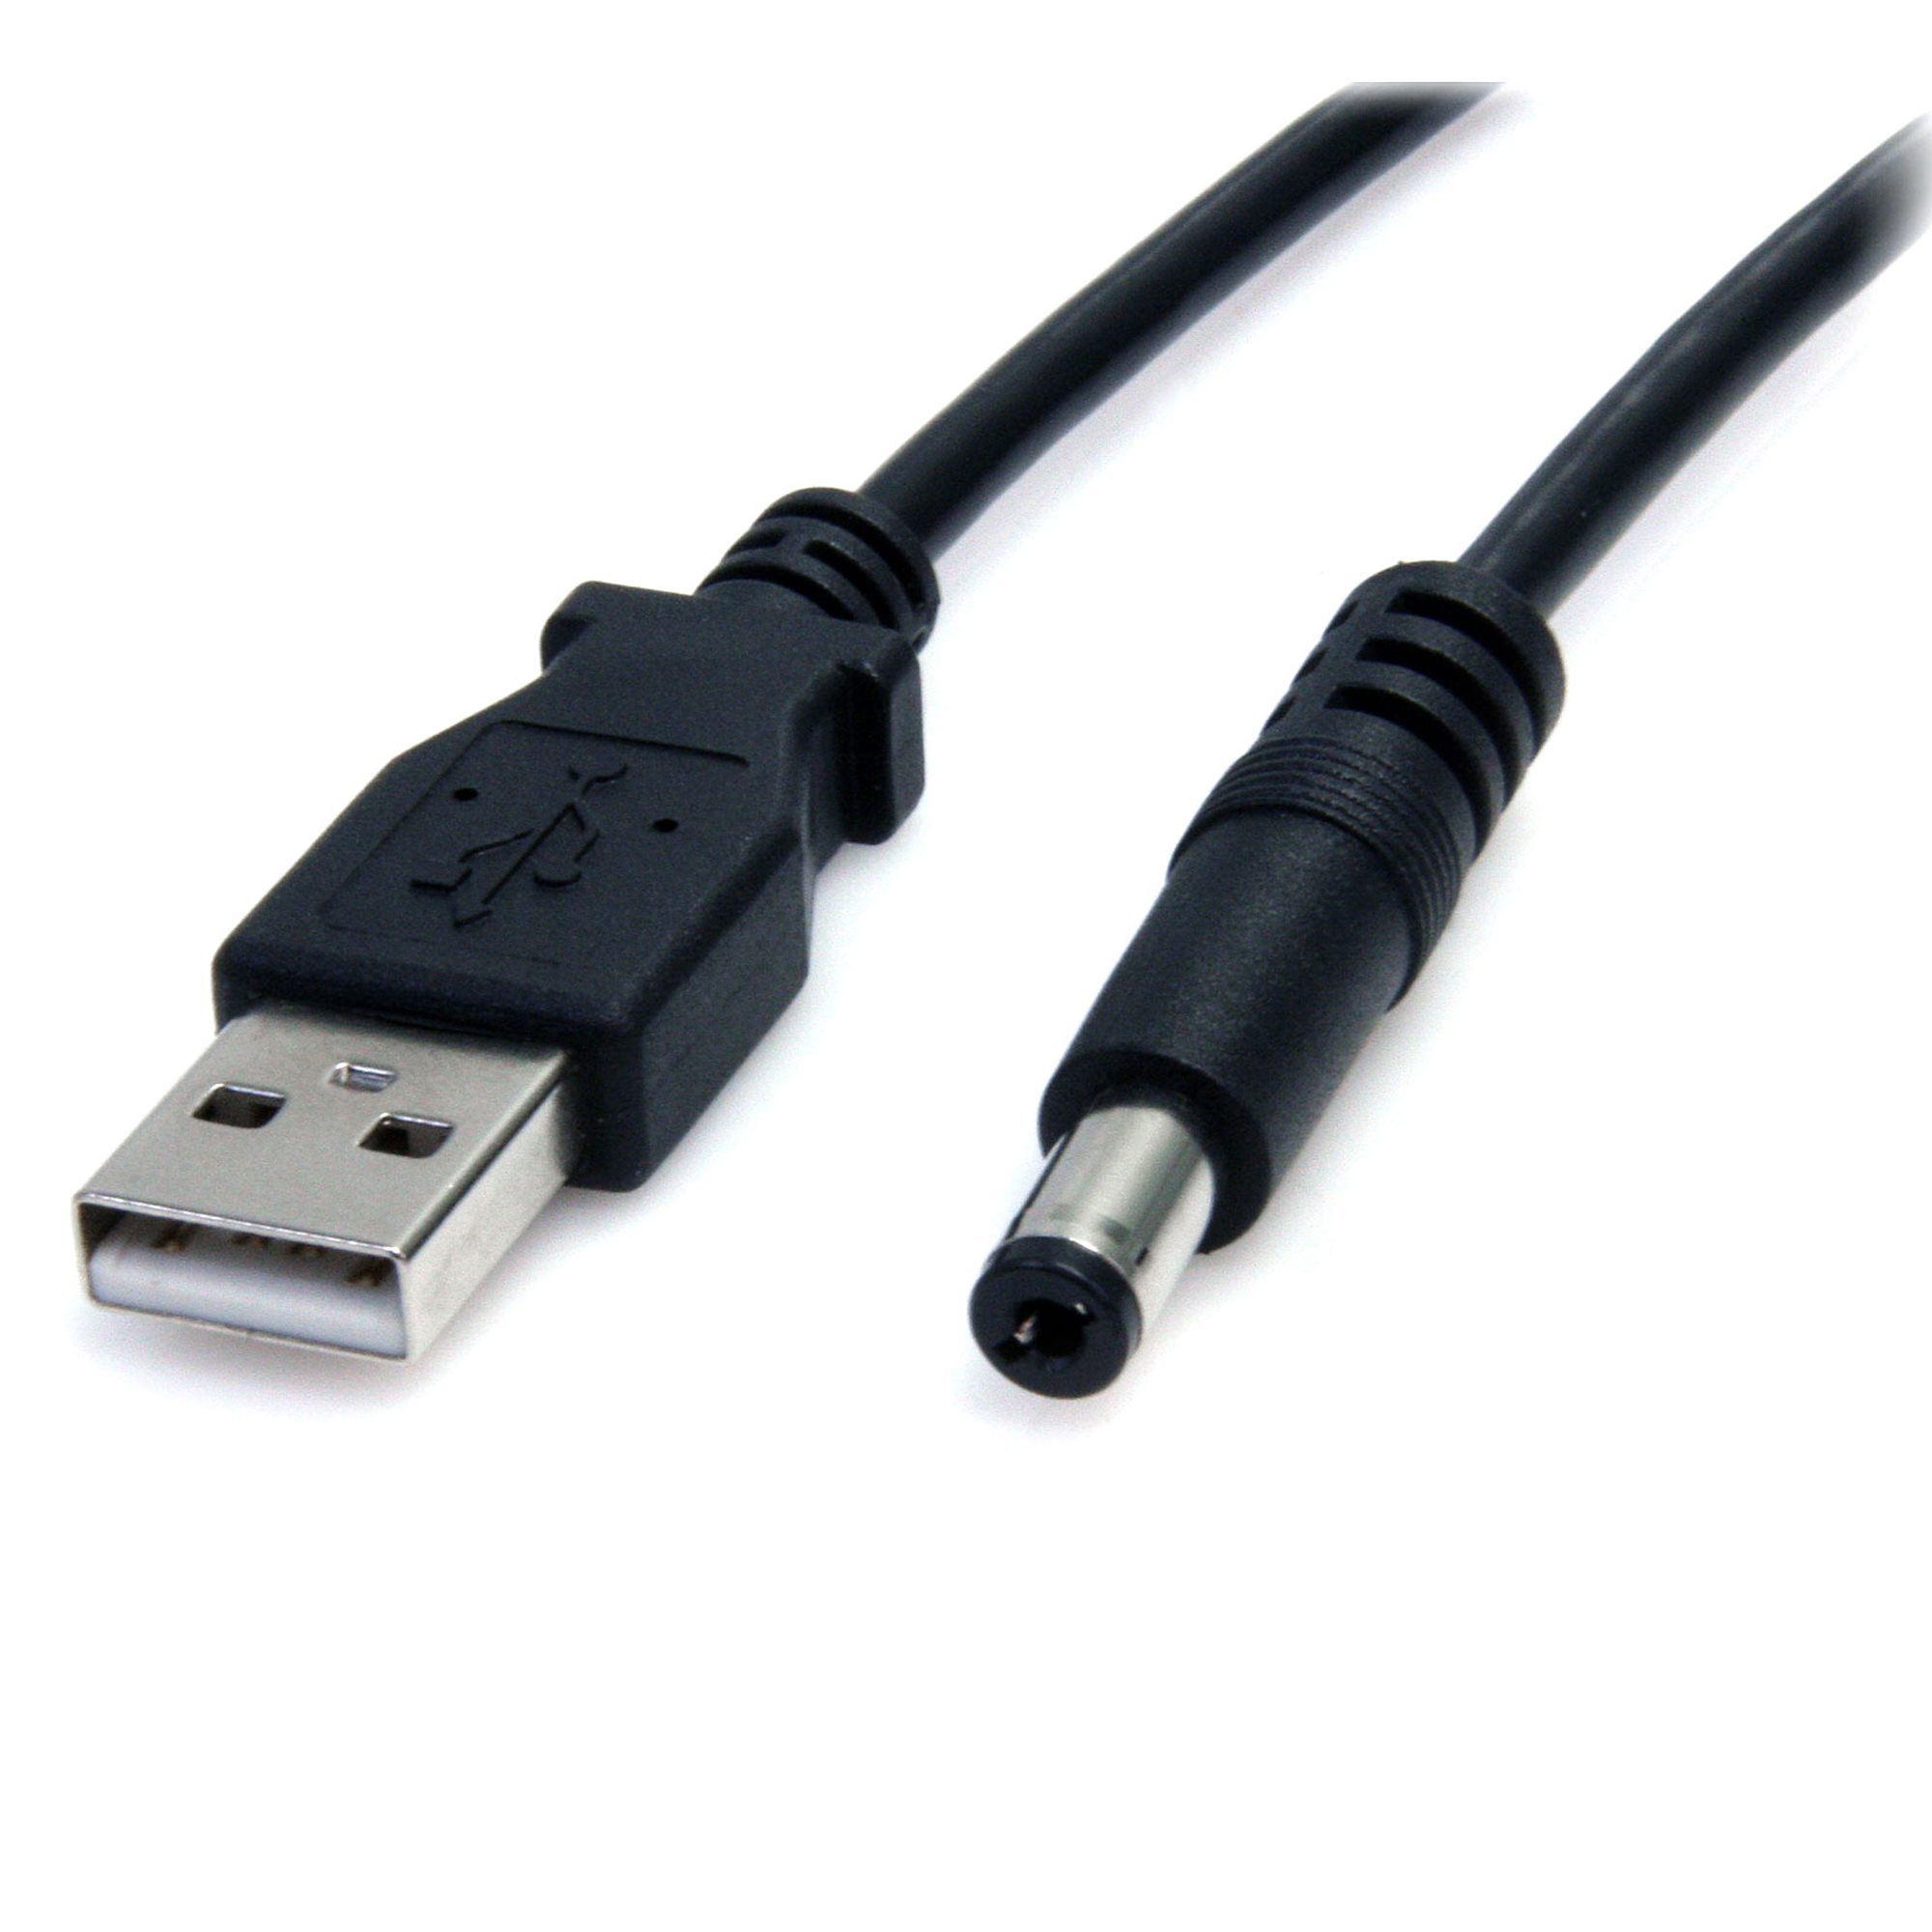 91cm USB auf 5V Hohlstecker / DC-Stecker - USB Adapter (USB 2.0